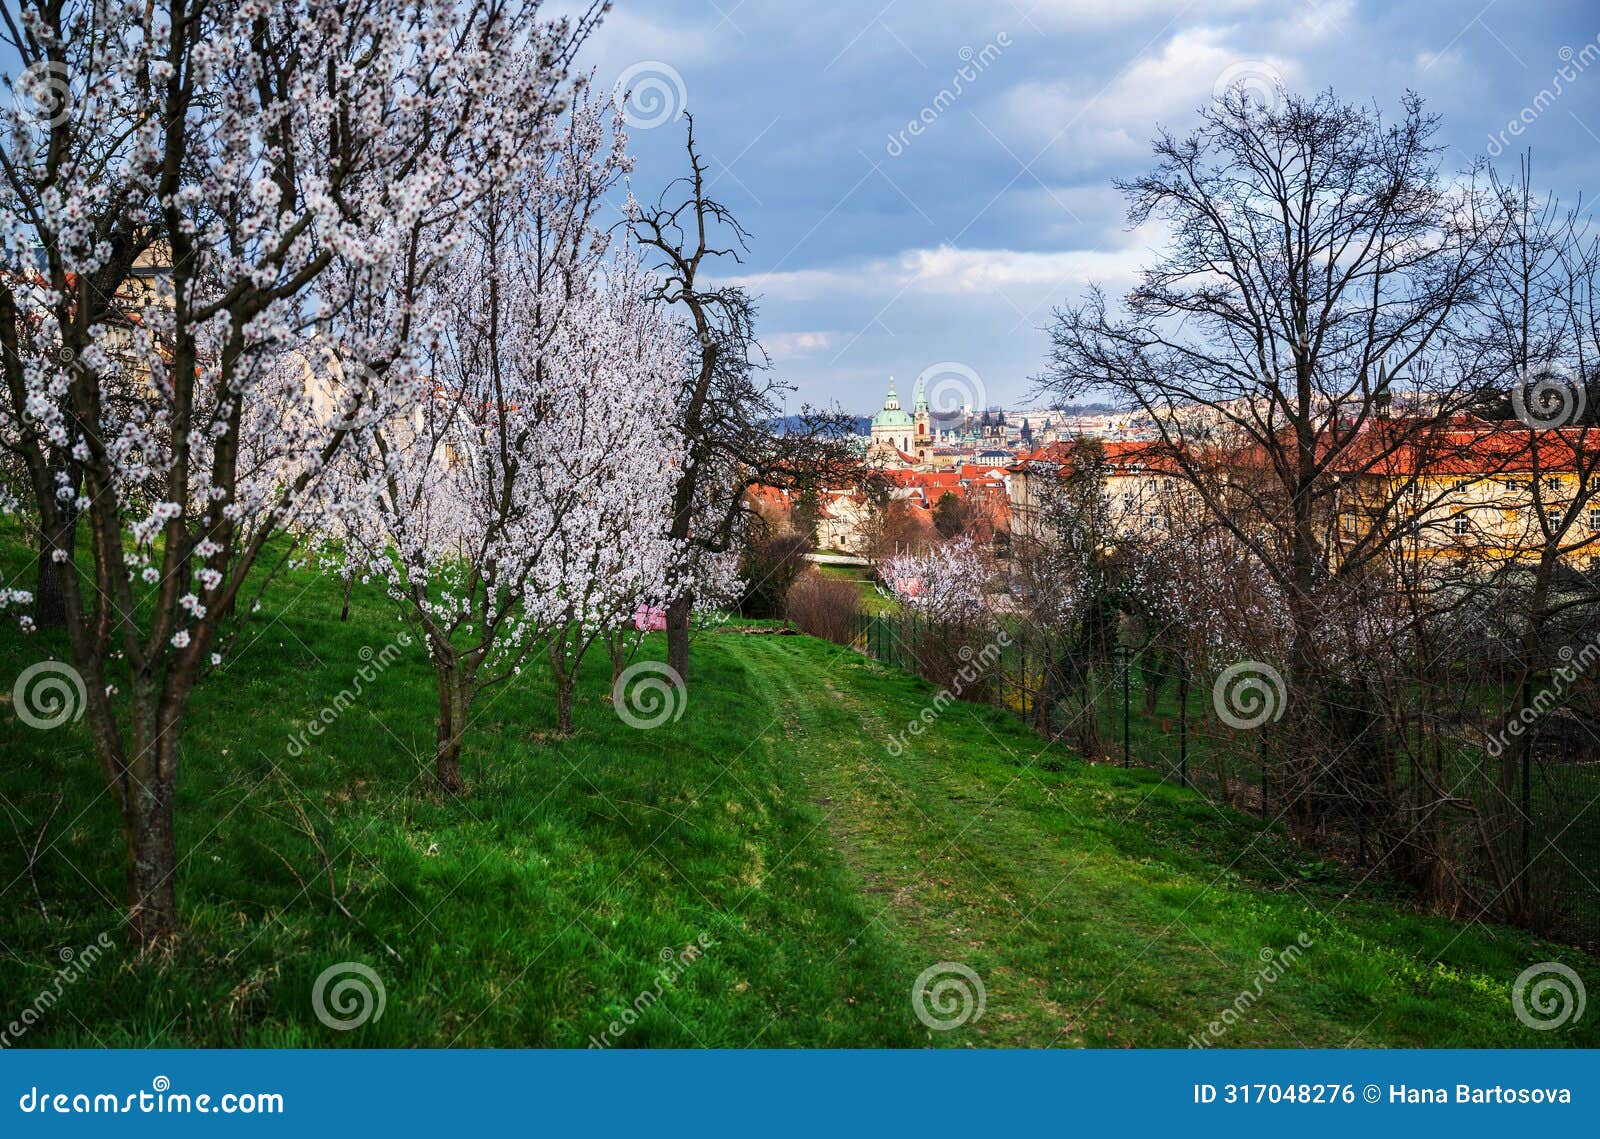 flowering almond tree in strahov garden, springtime